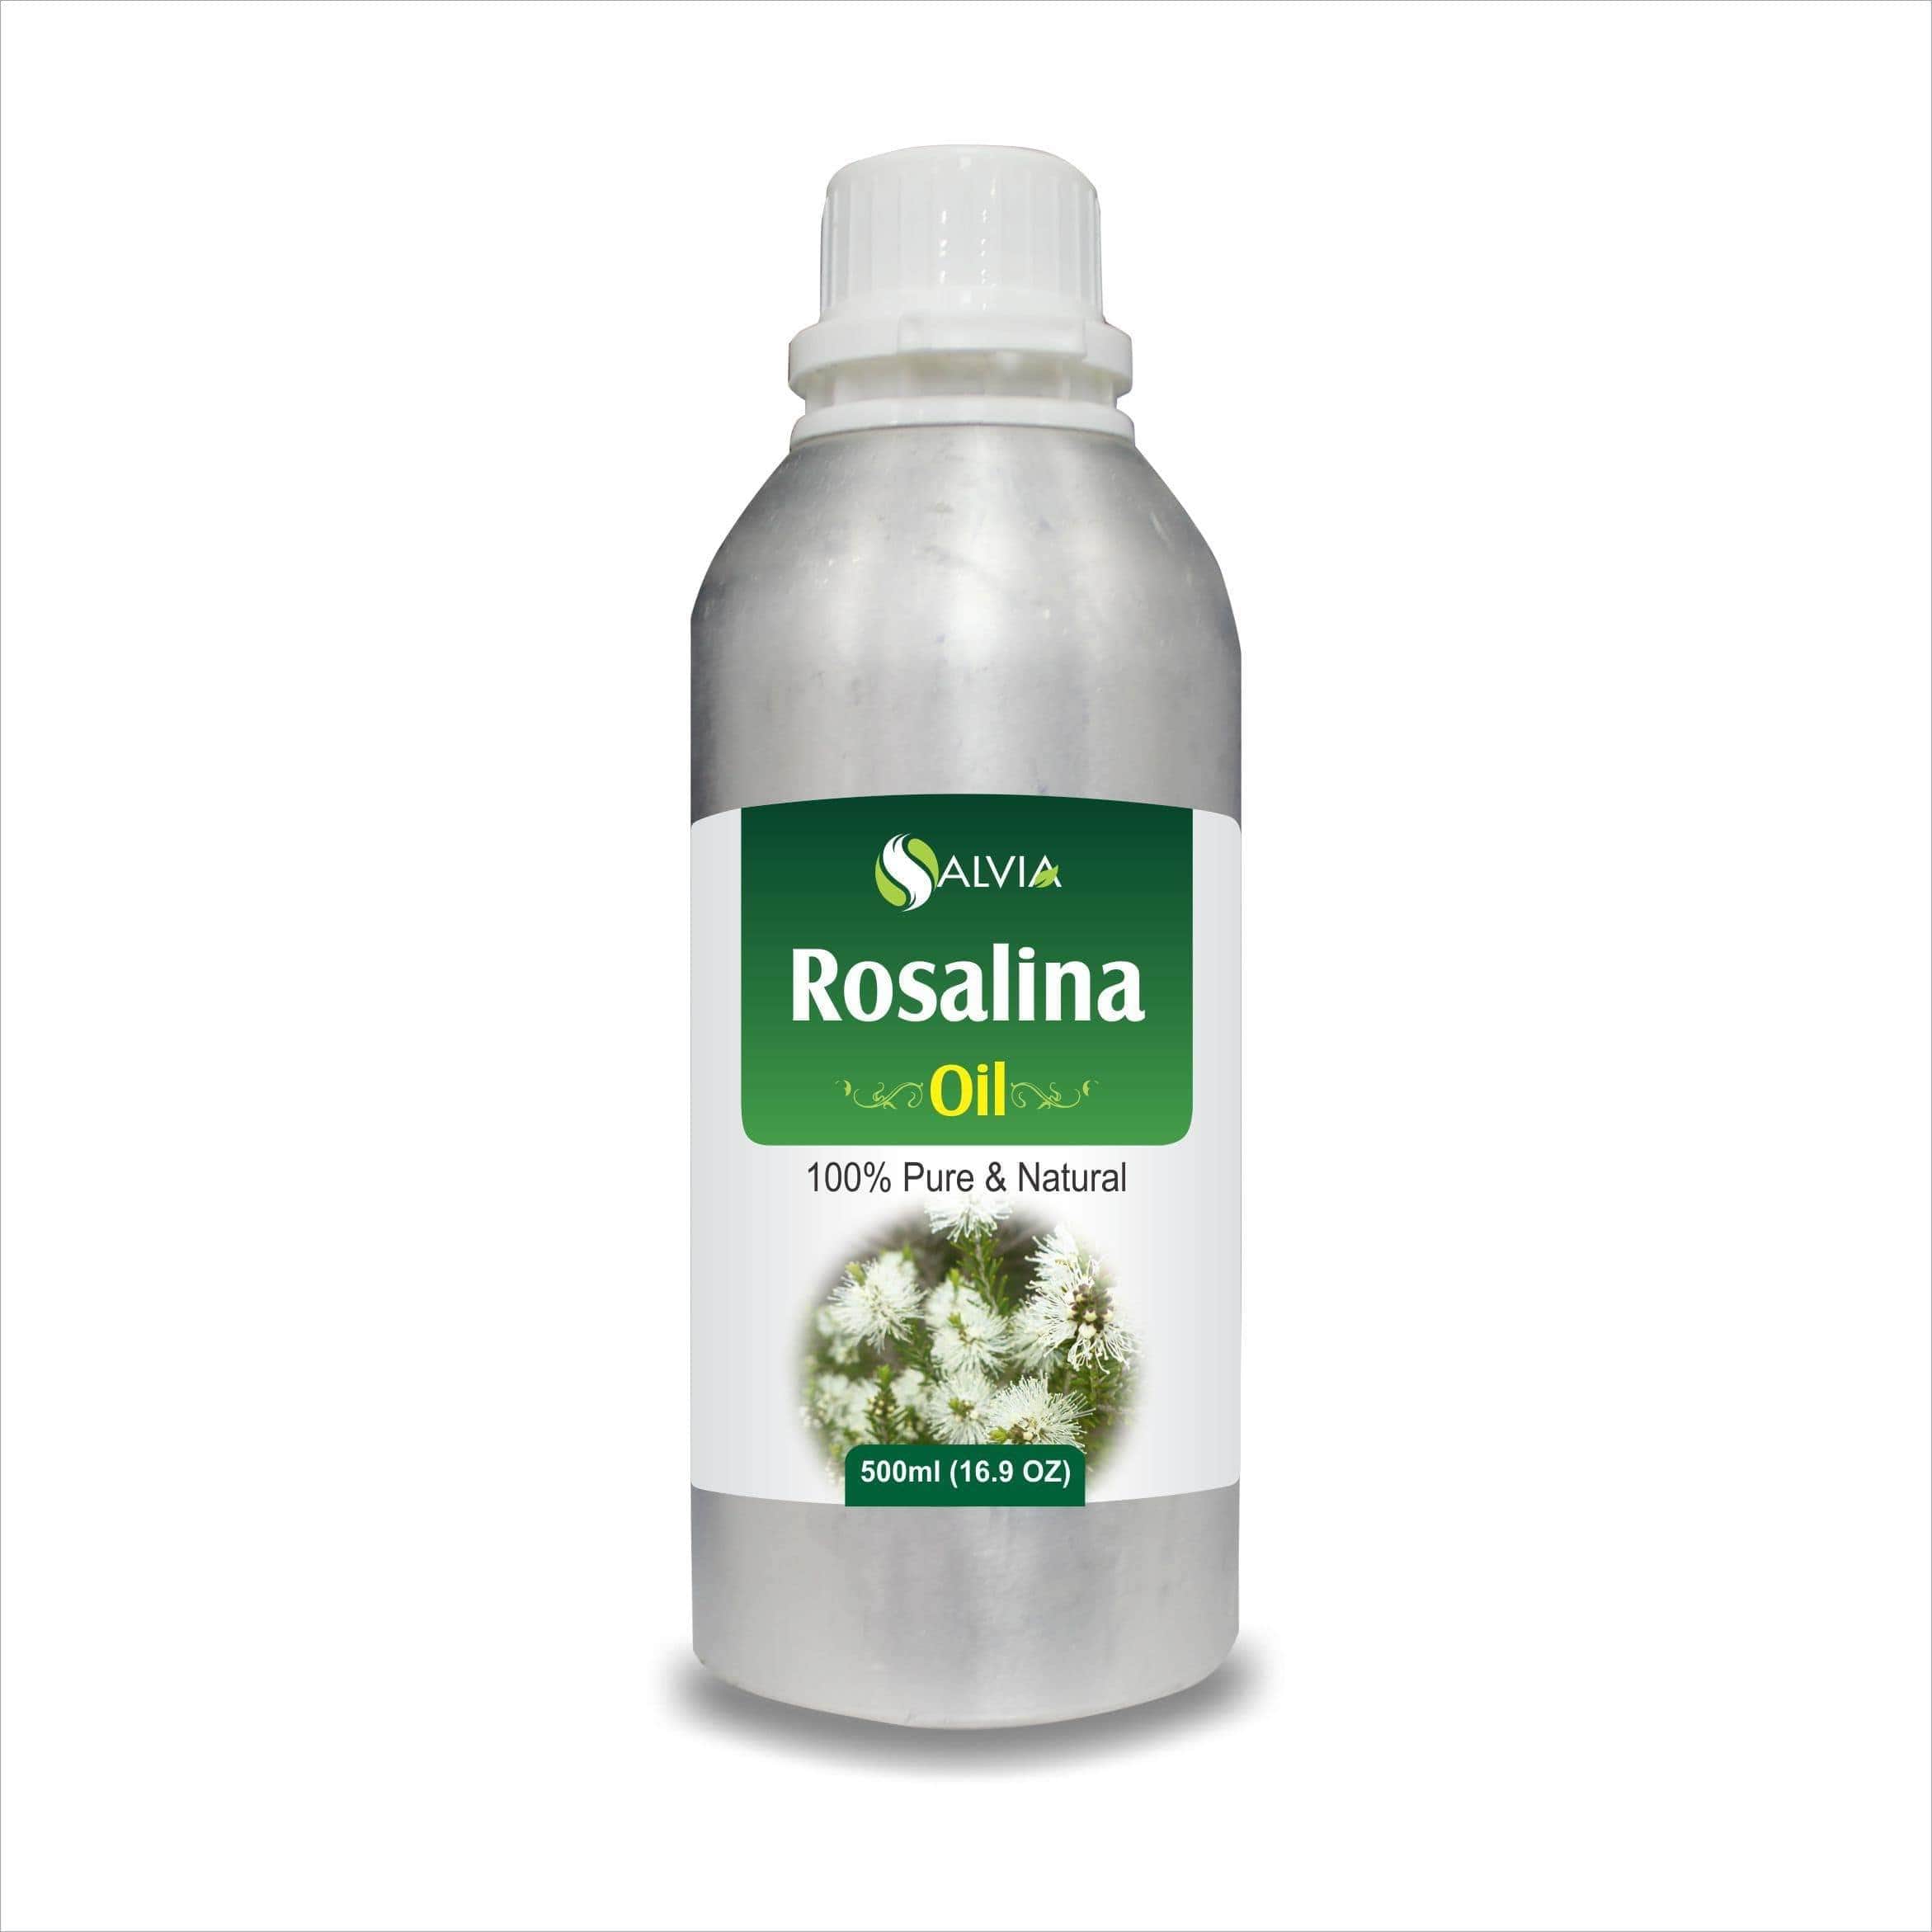 rosalina oil for skin